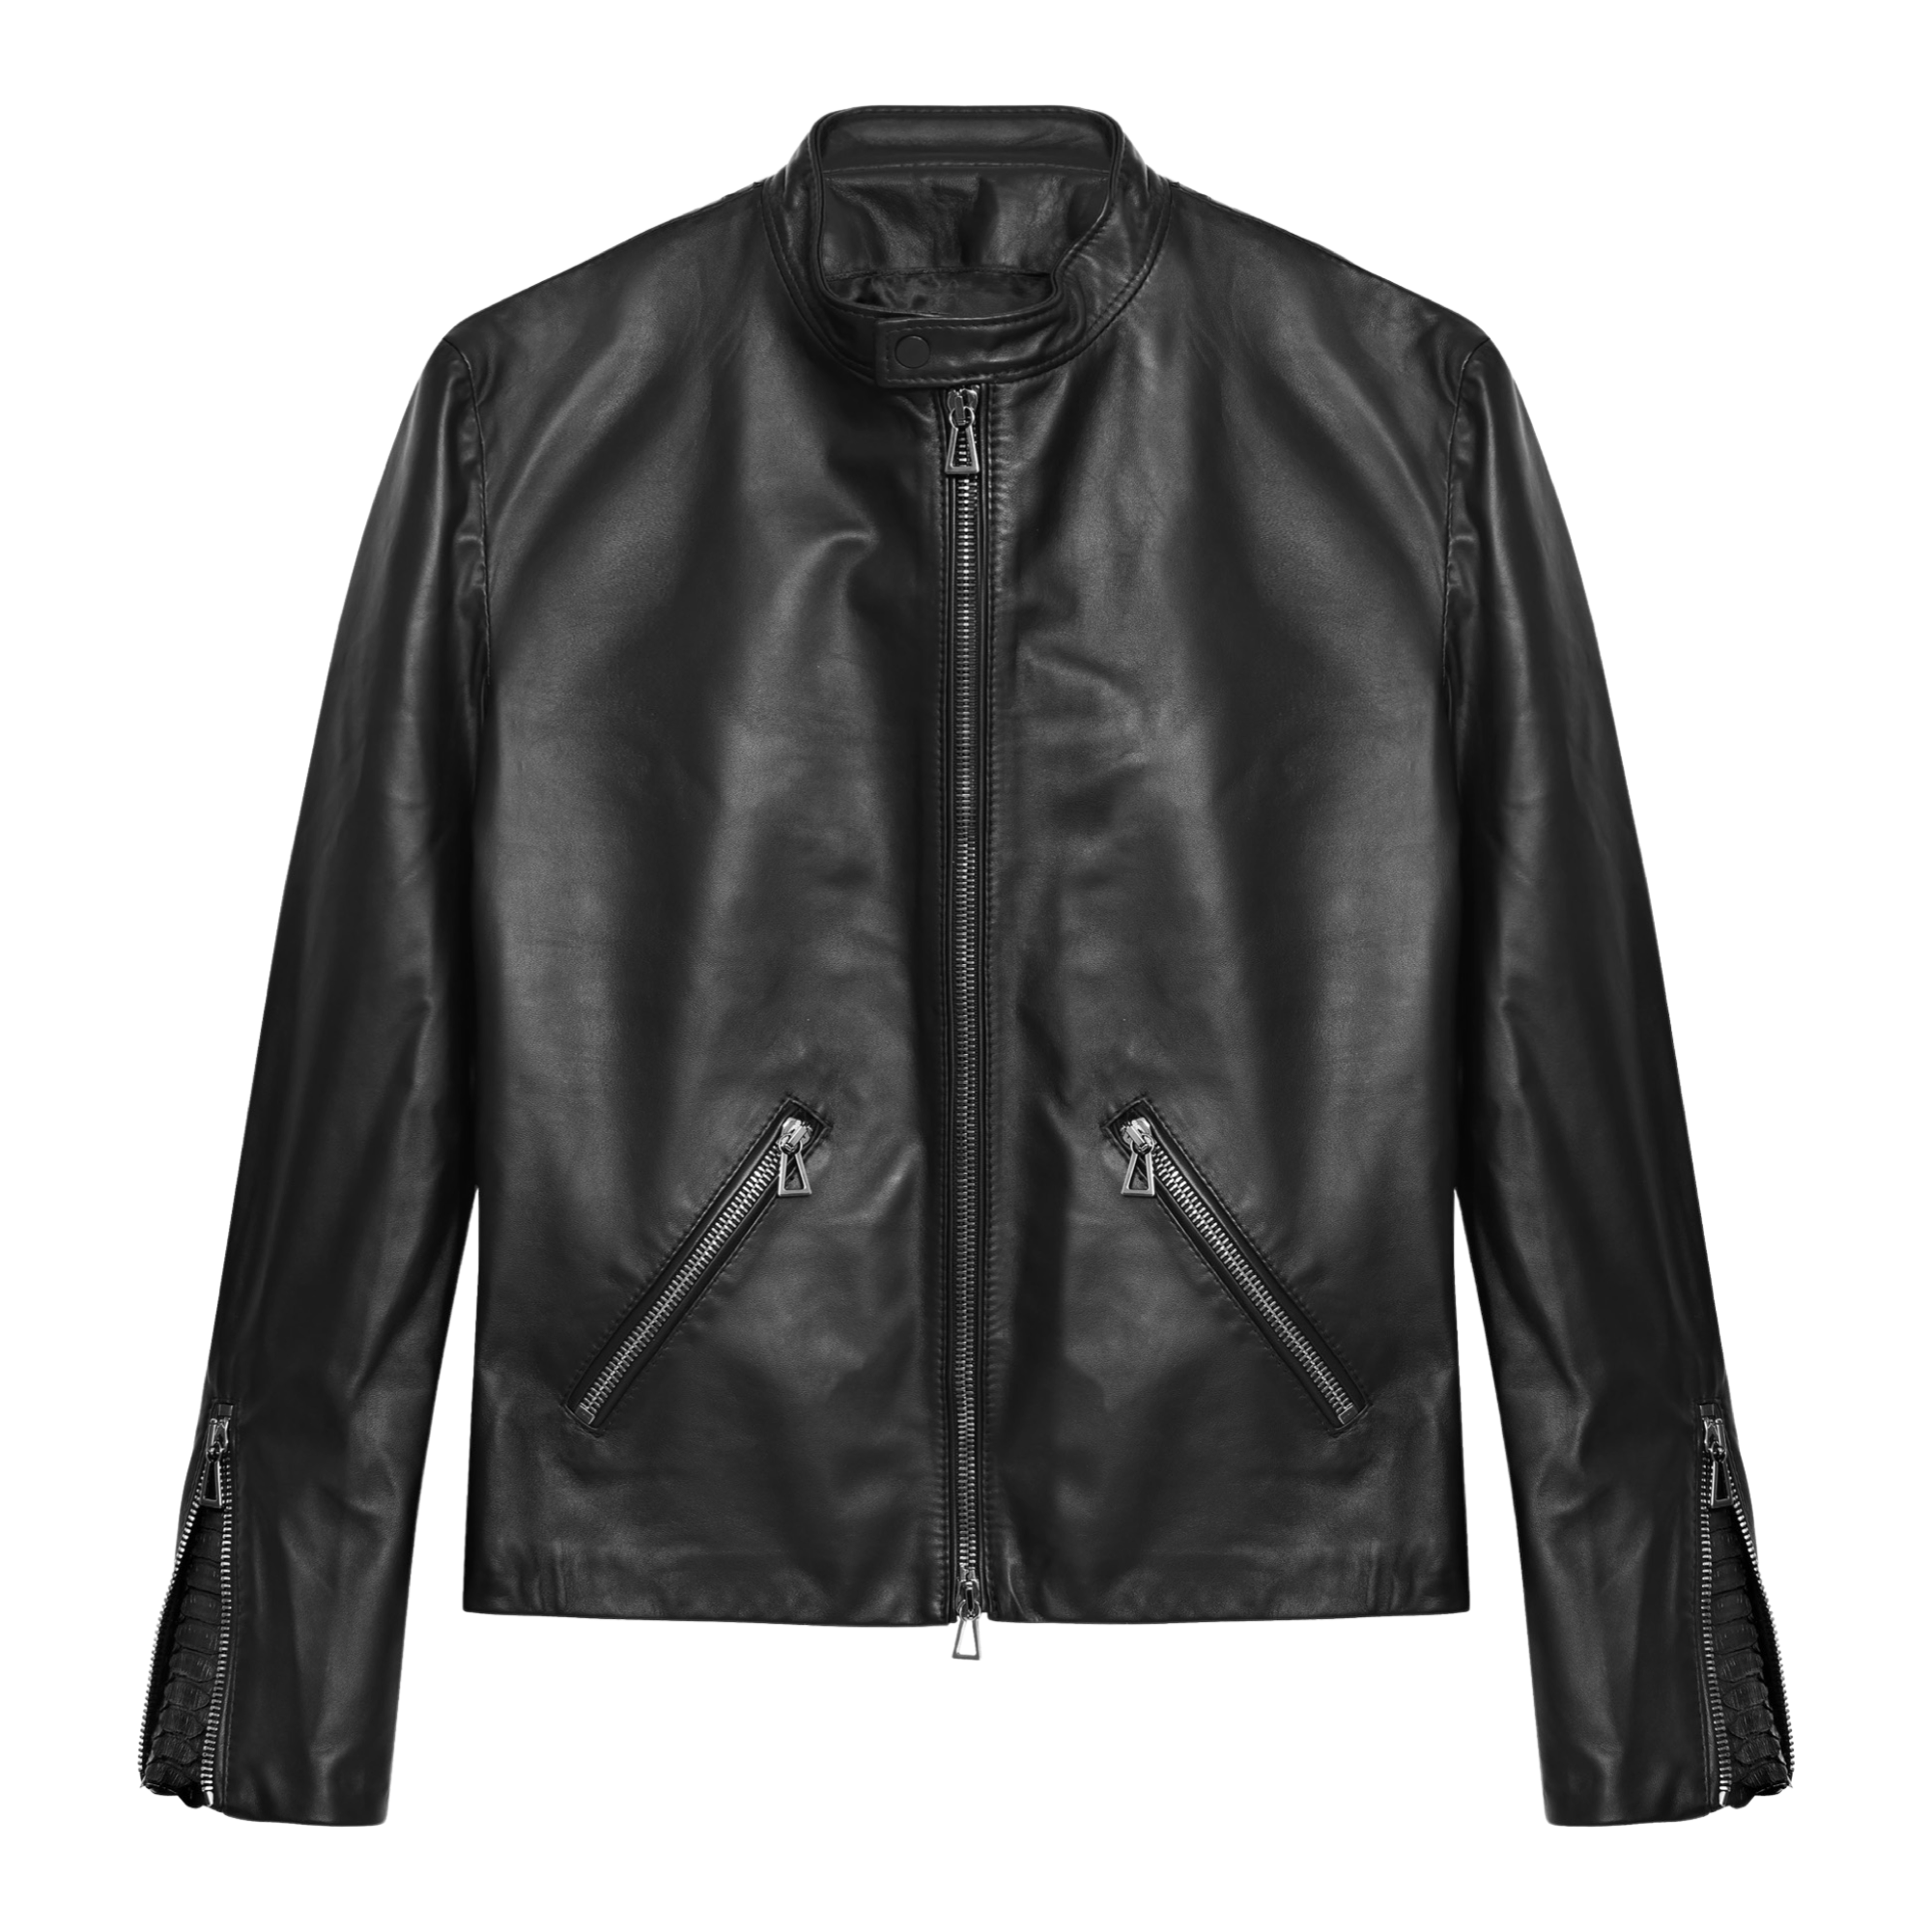 Leather jacket - Stockholm by Martin Key